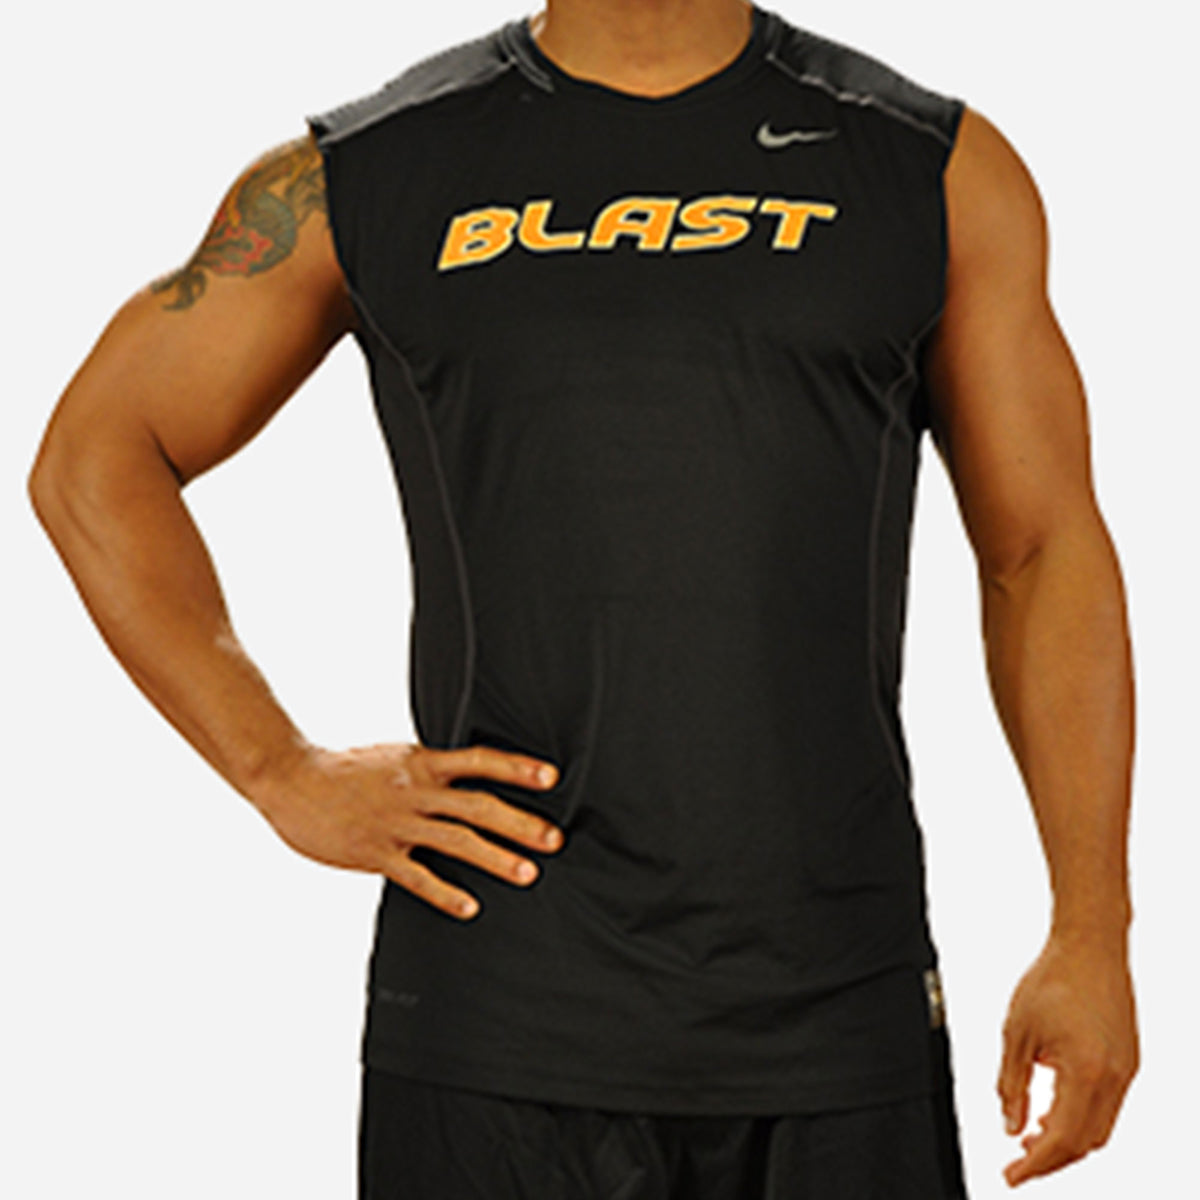 MOSSA Group Blast Men's Nike Pro Fitted Sleeveless